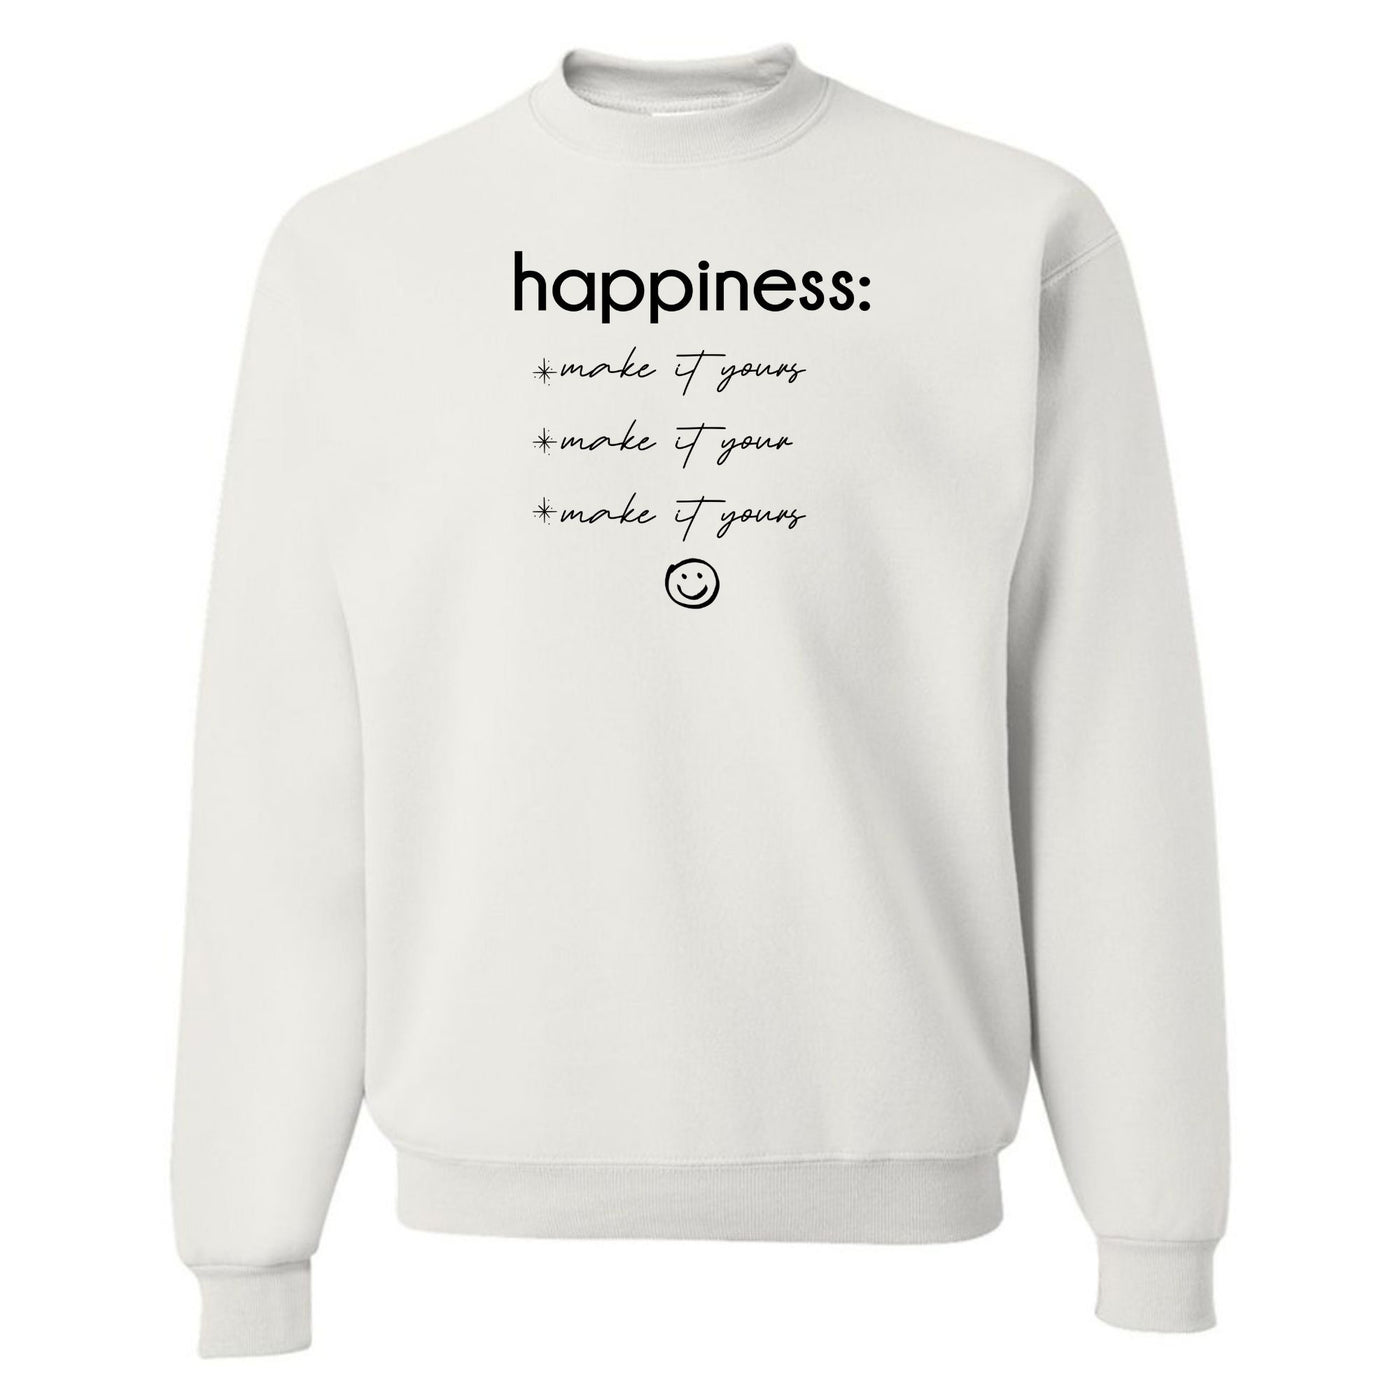 Make It Yours™ 'Happiness Checklist' Crewneck Sweatshirt